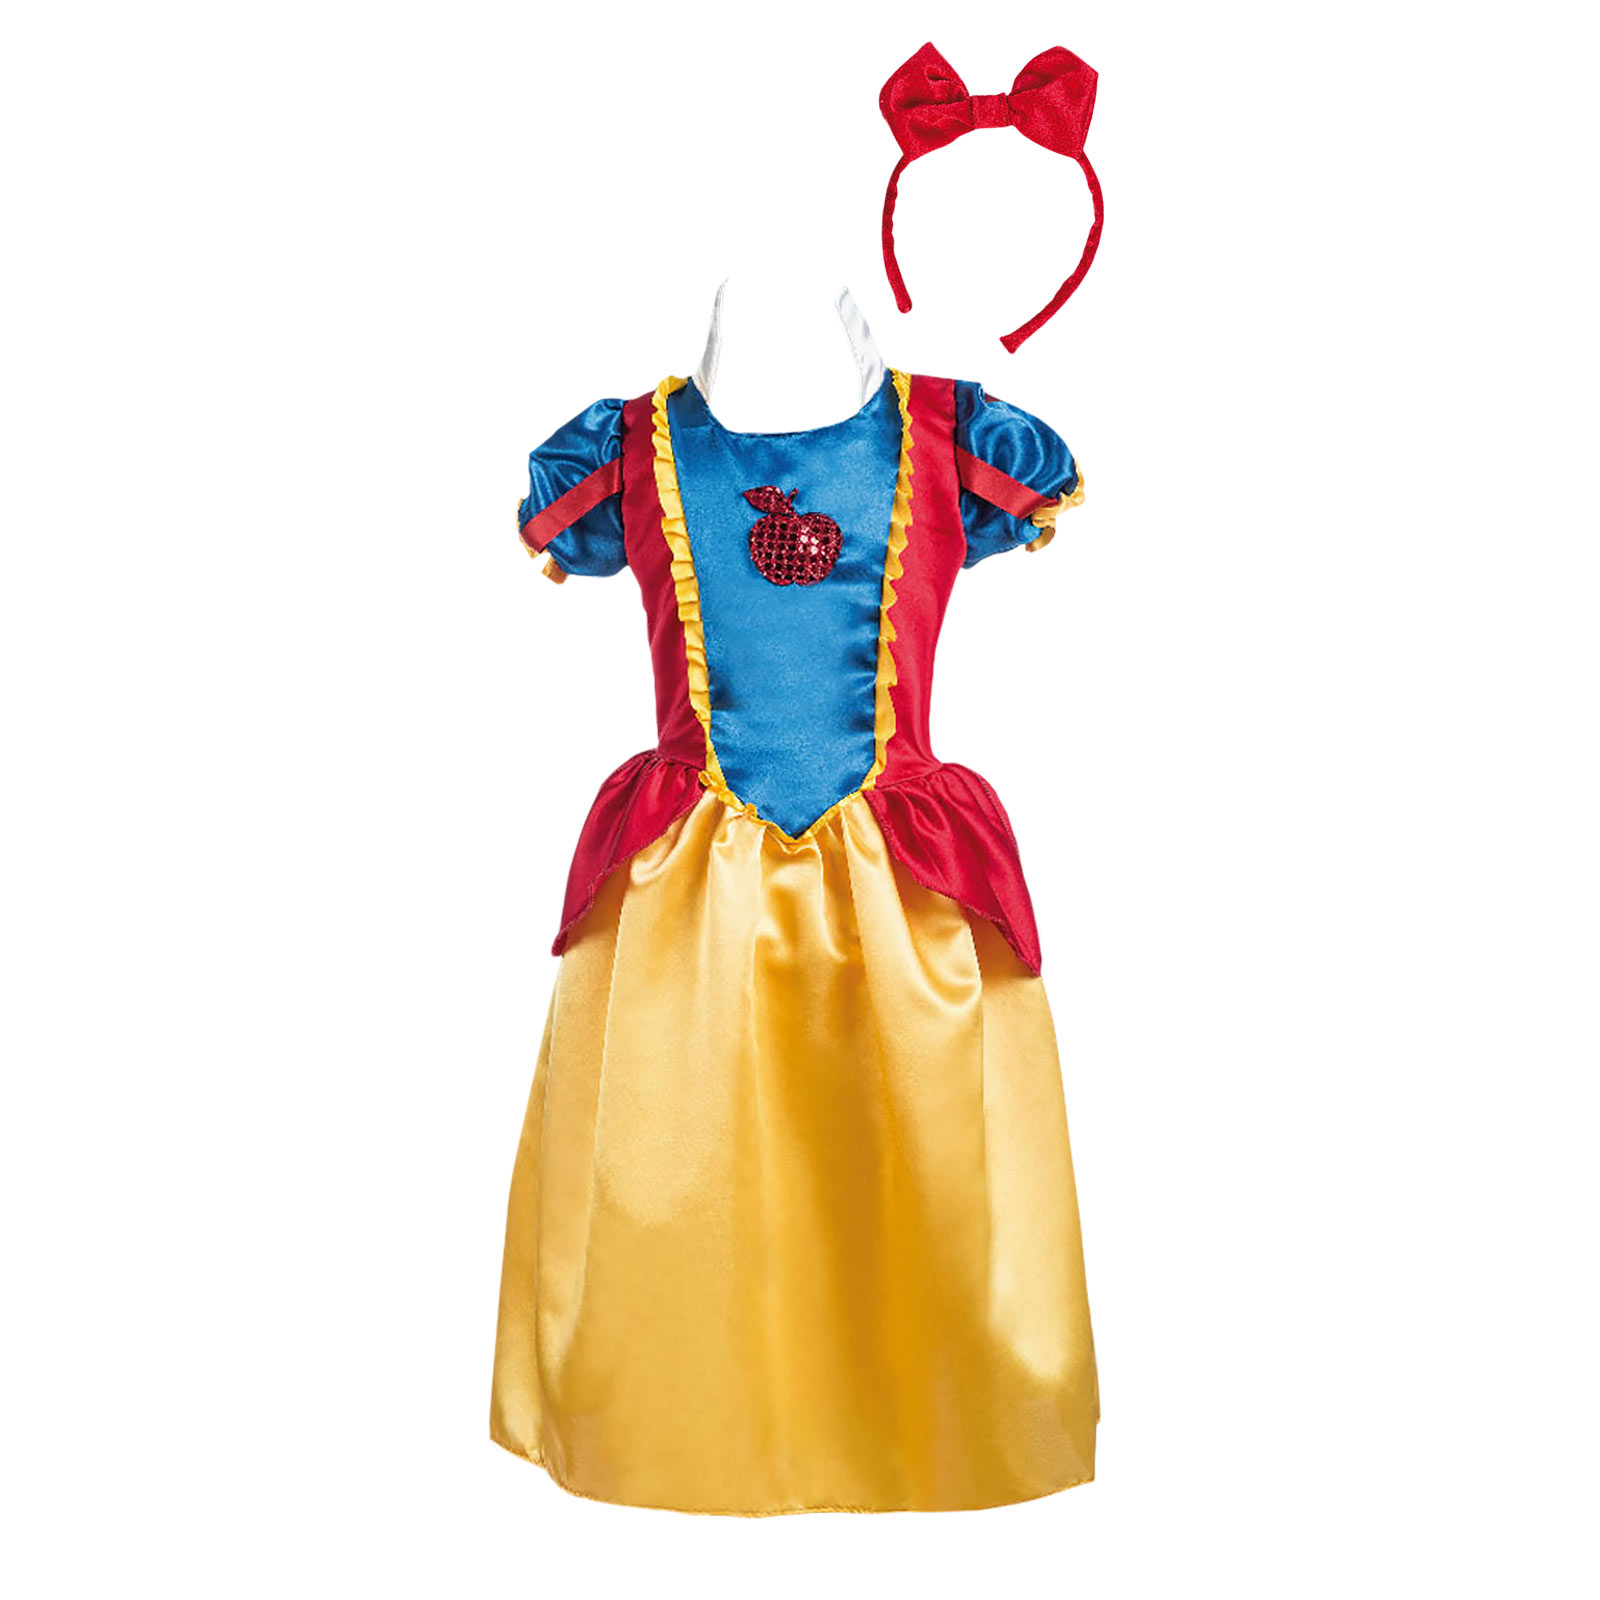 Snow White - costume children